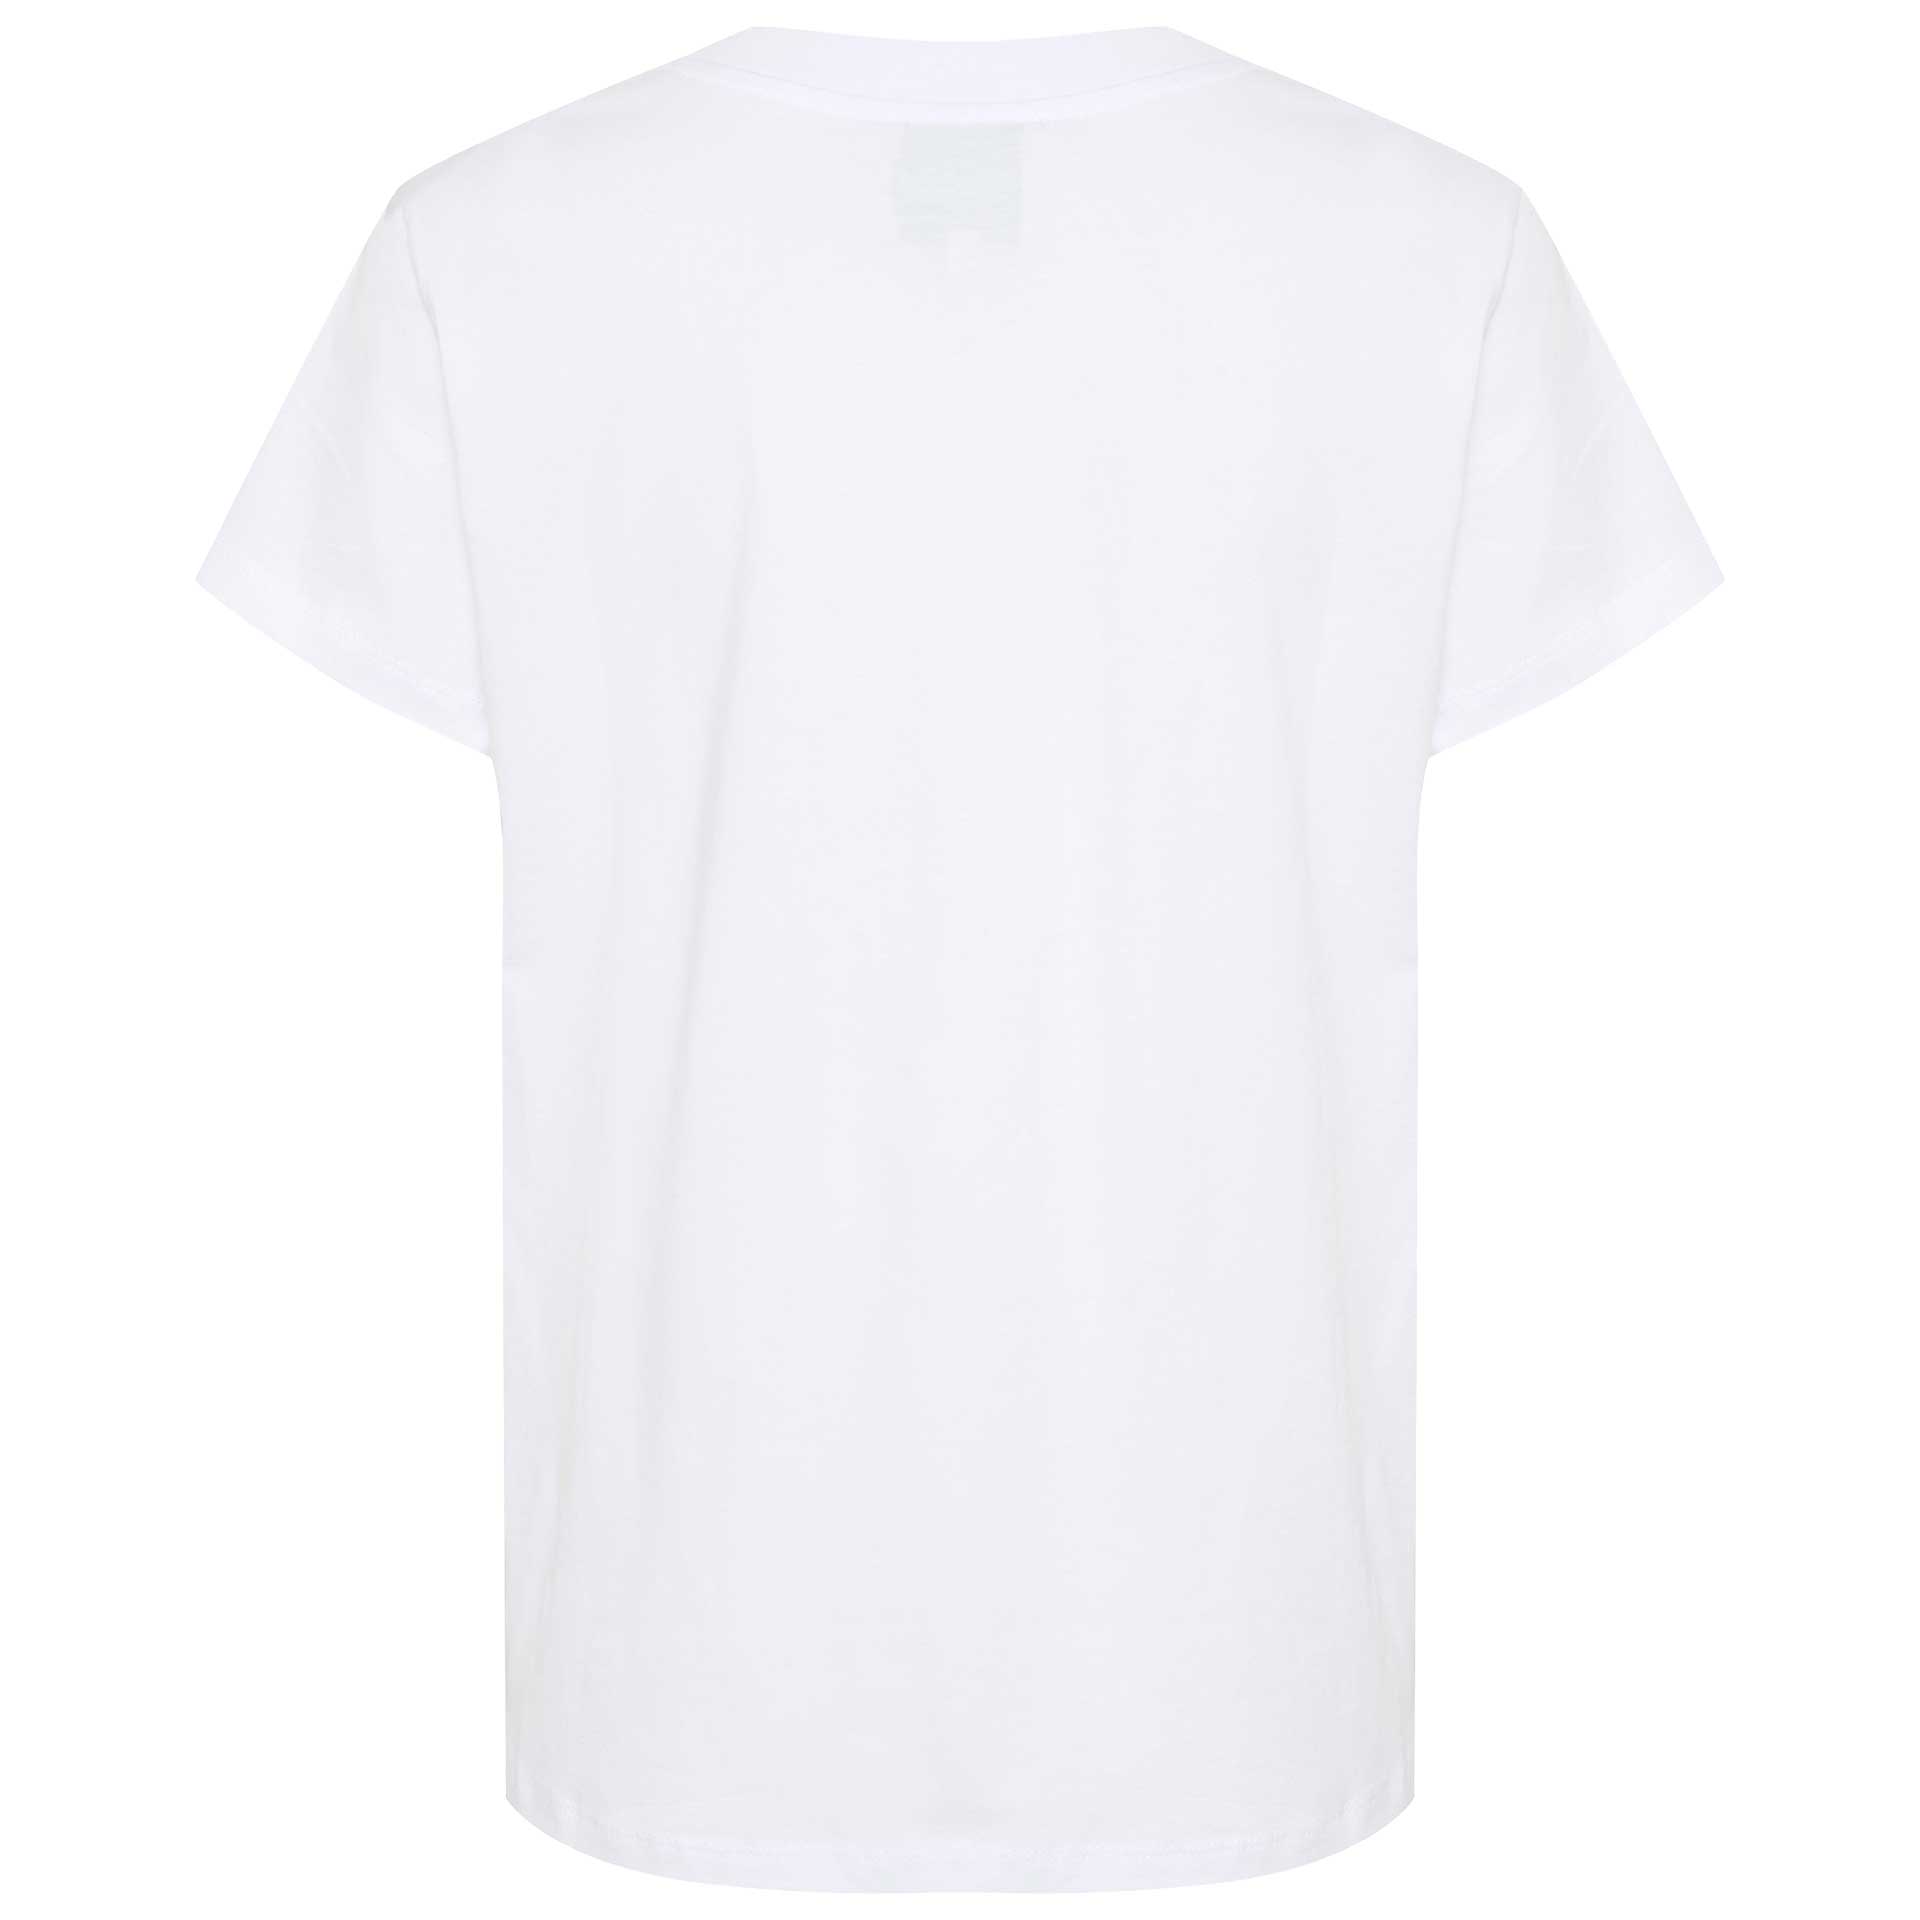 My Essential Wardrobe T-shirt Hanne 2